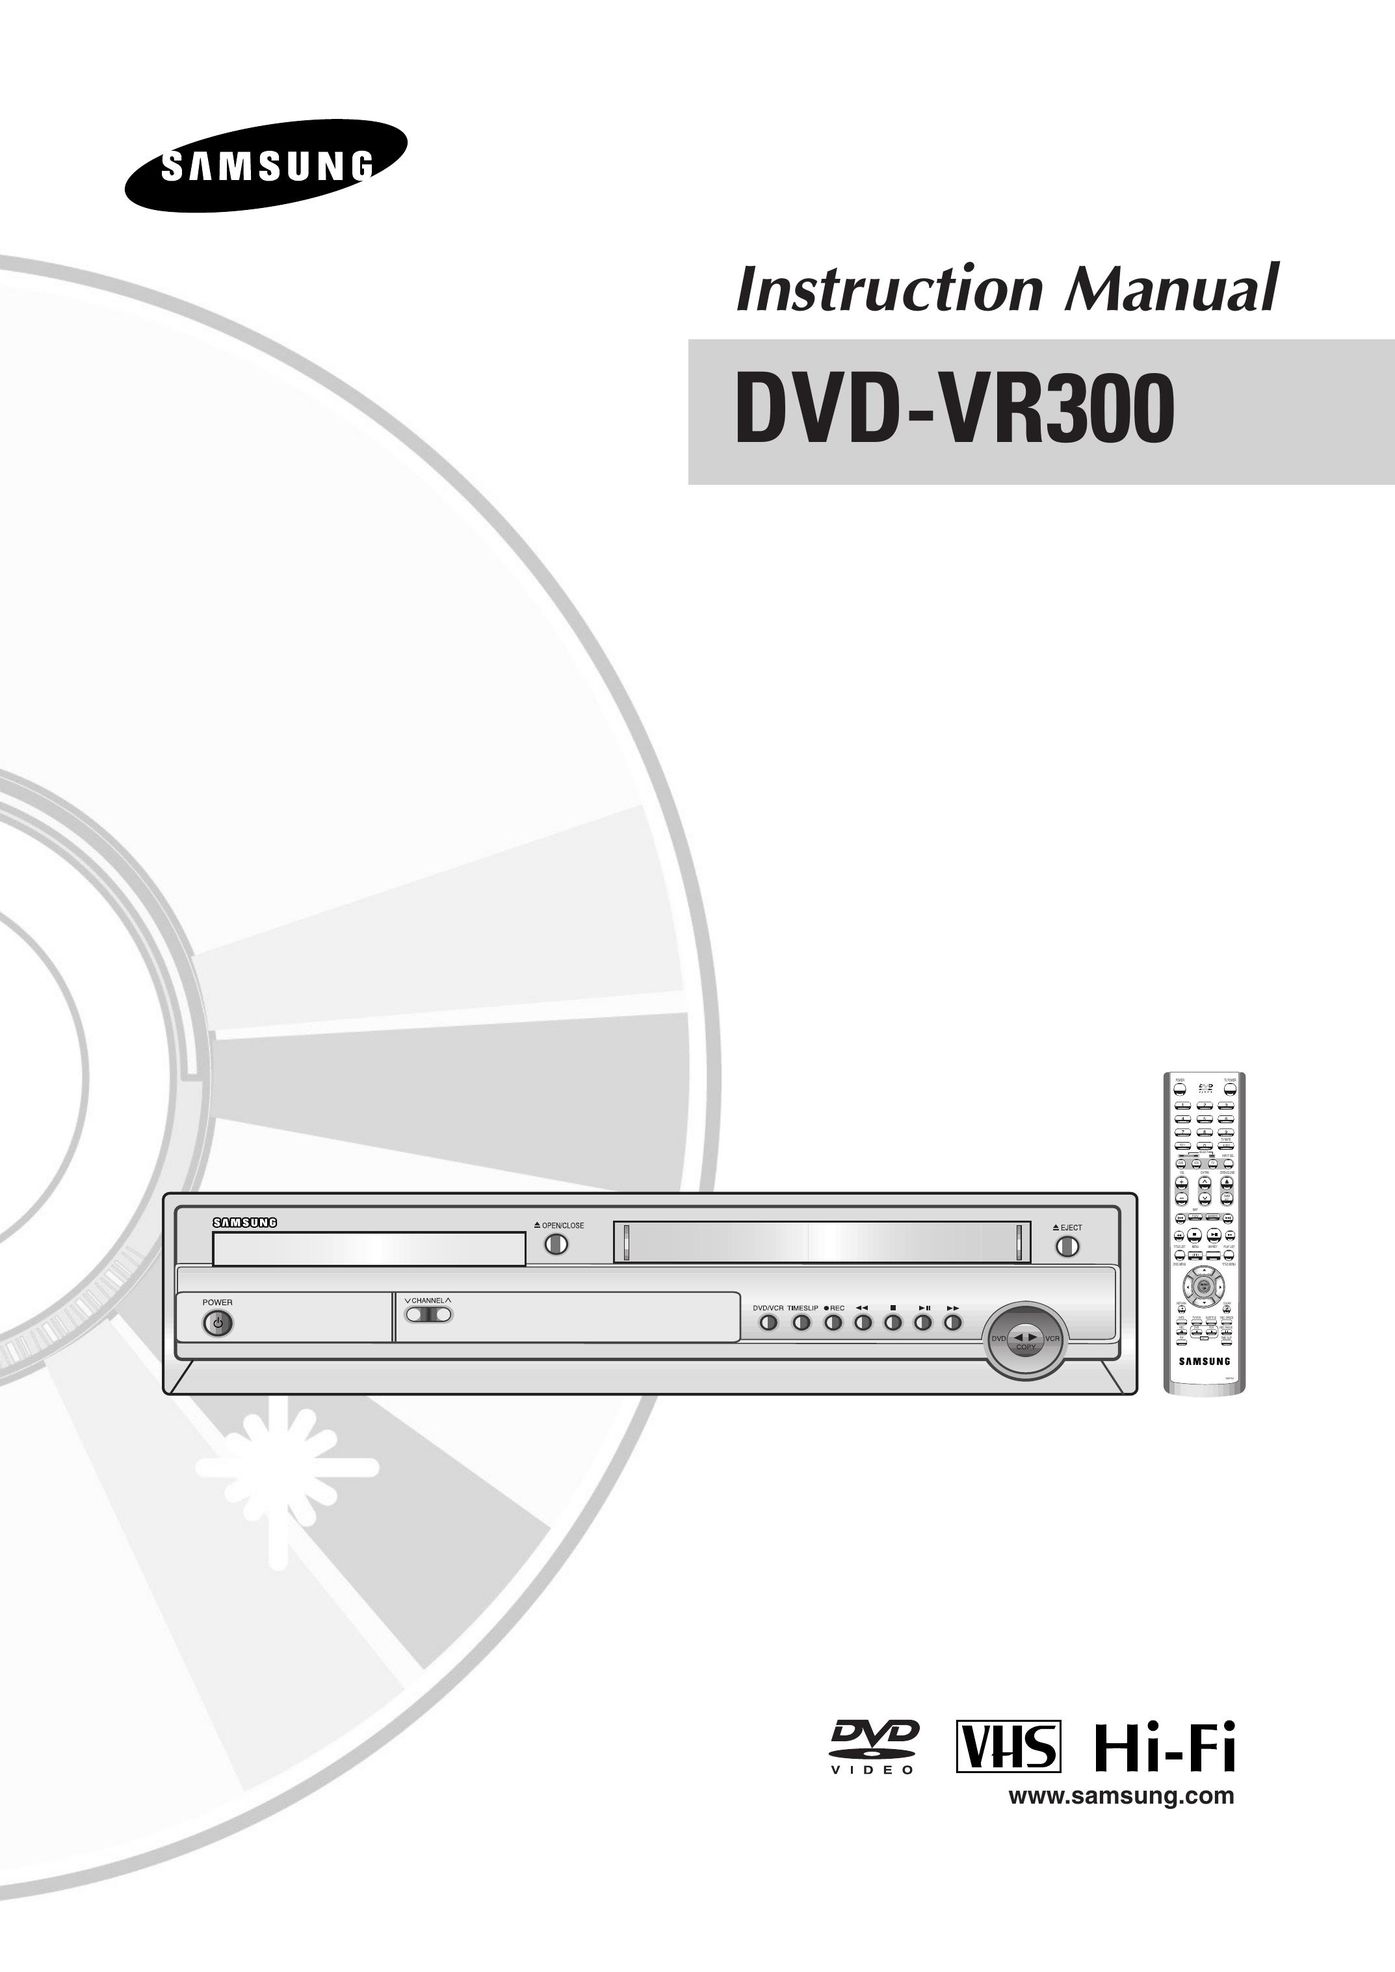 Samsung DVD-VR300 MP3 Player User Manual